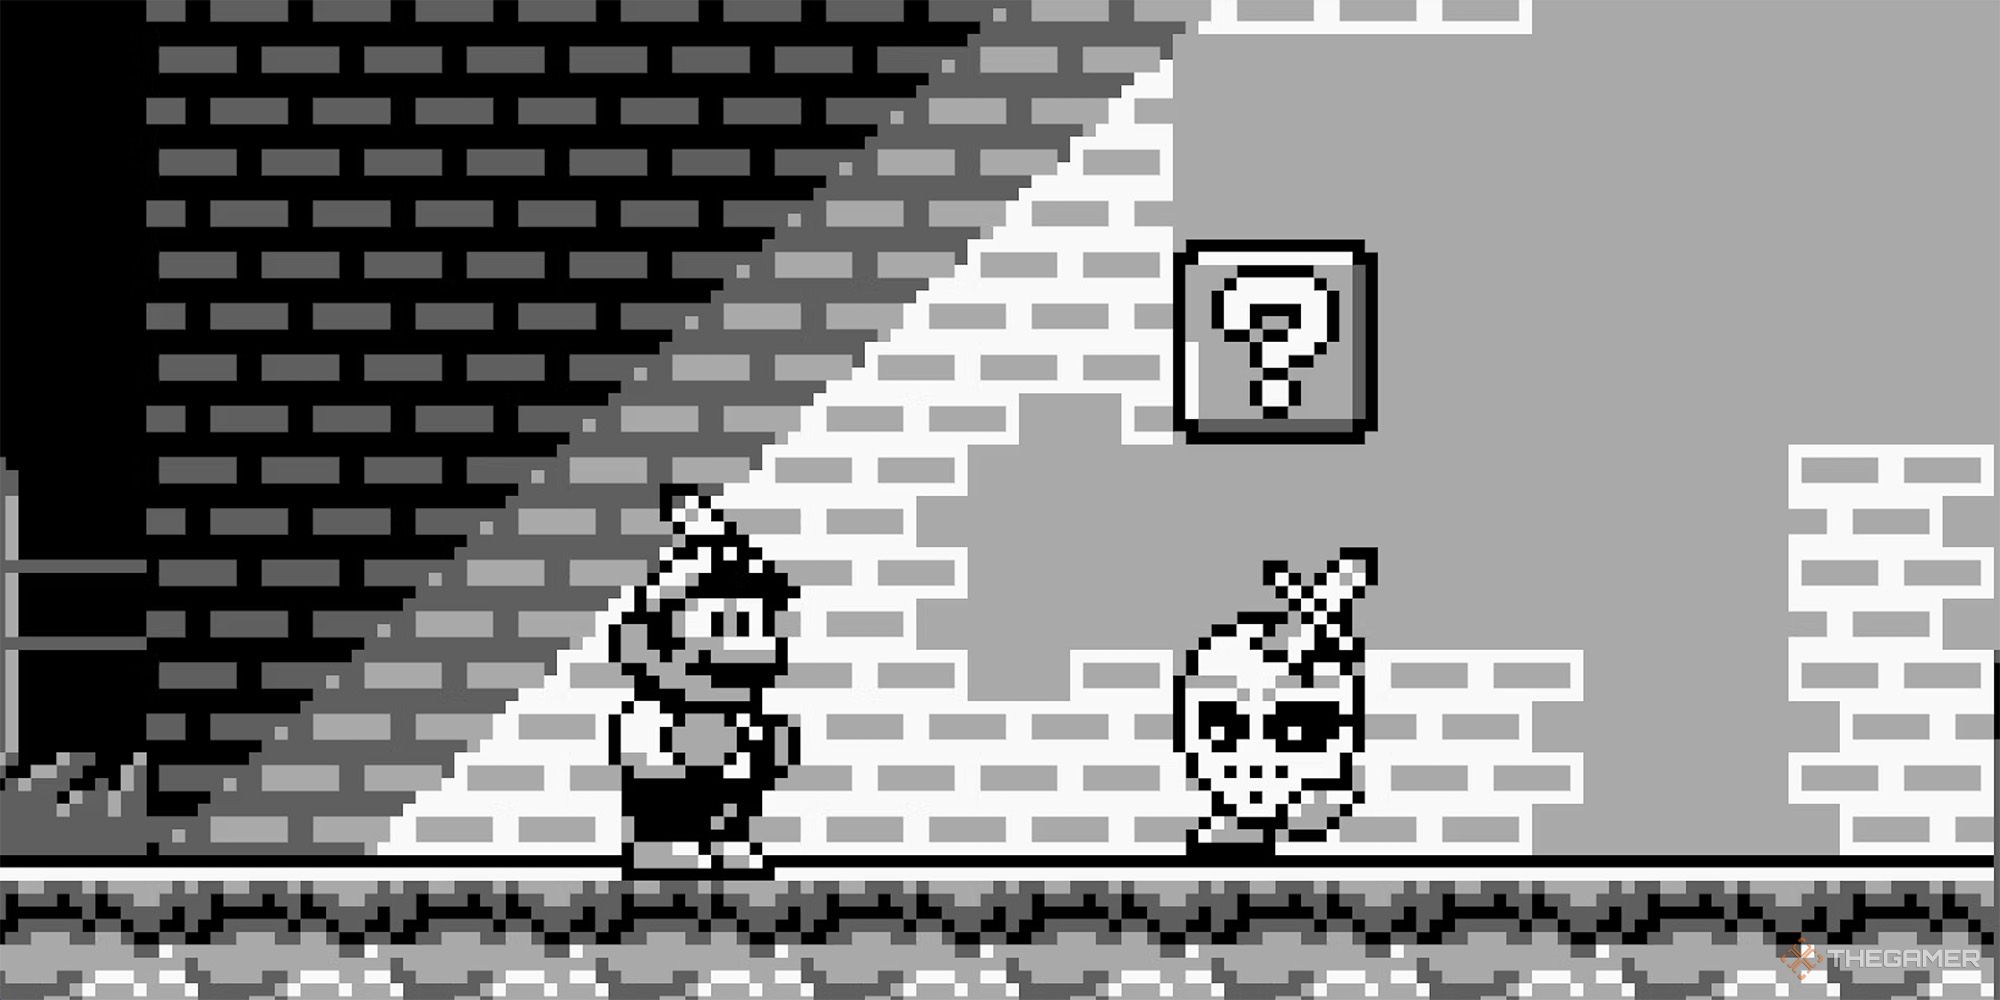 Super Mario Land 2 - Mario preparing to fight an enemy in Pumpkin Zone